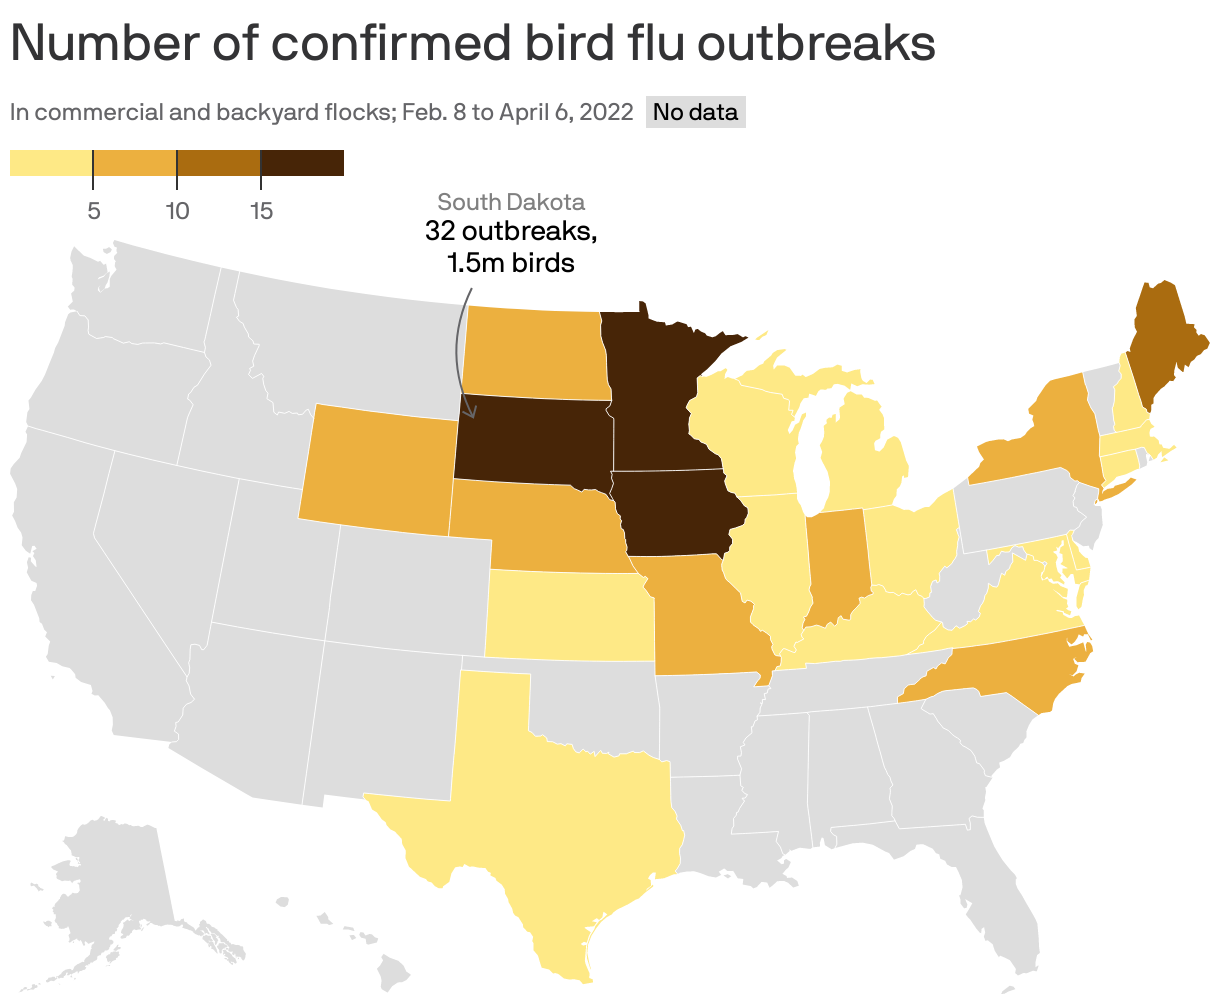 Number of confirmed bird flu outbreaks